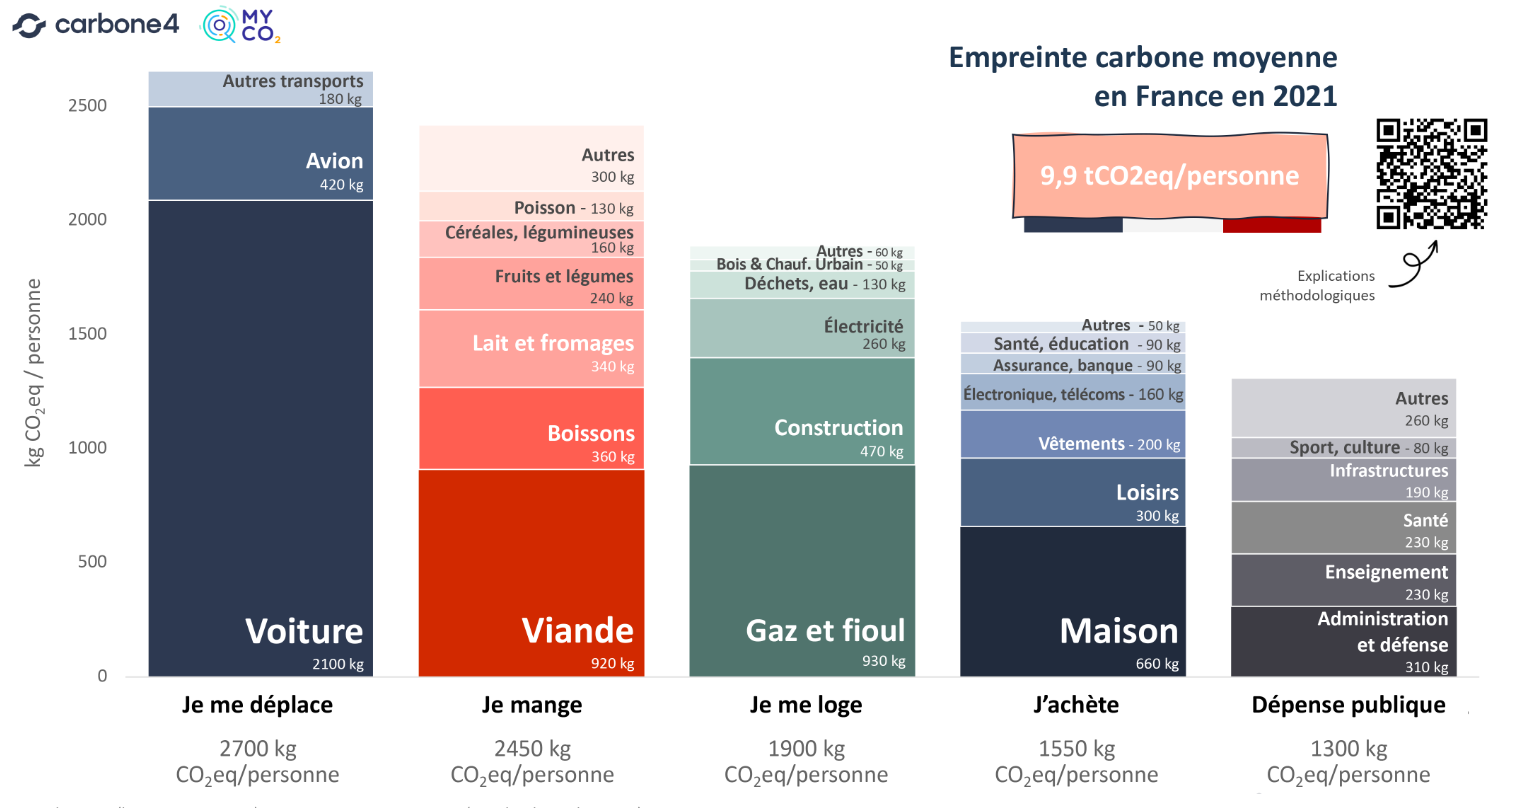 empreinte carbone moyenne d'un.e français.e en 2021